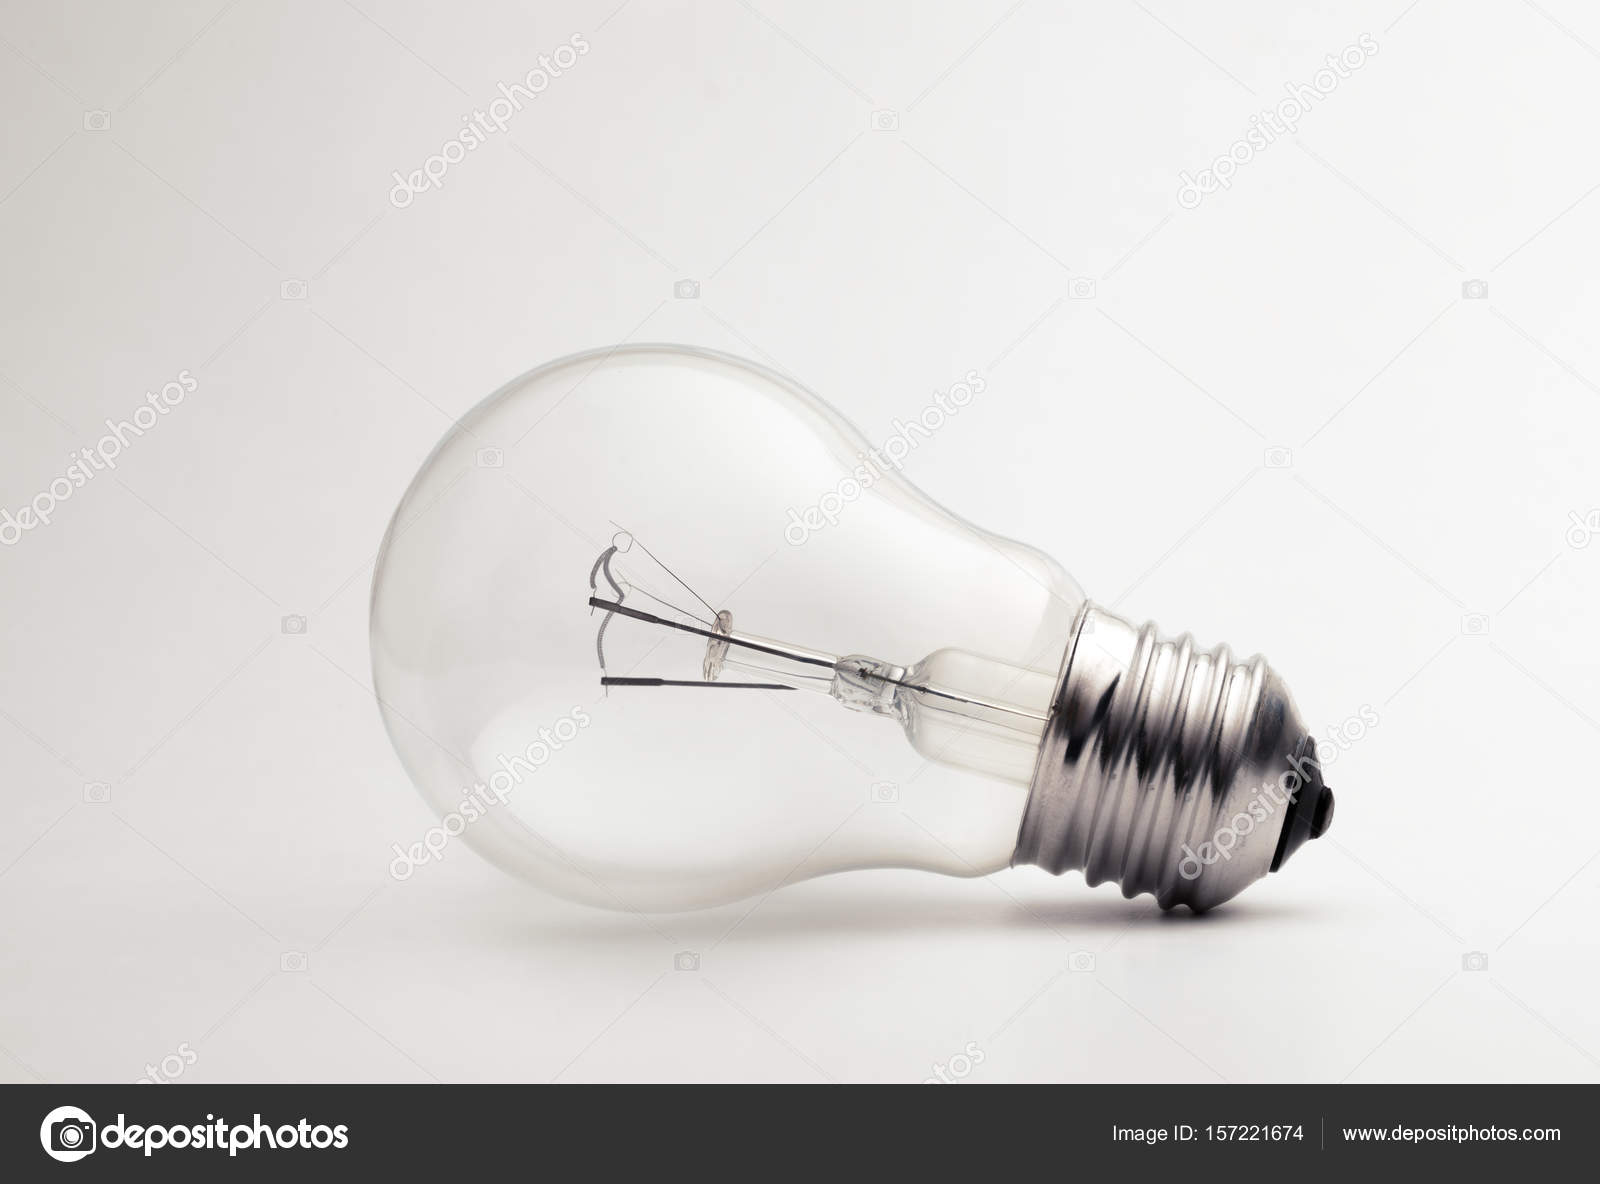 Transparent bulb on a background. Stock Photo by ©ekramar 157221674